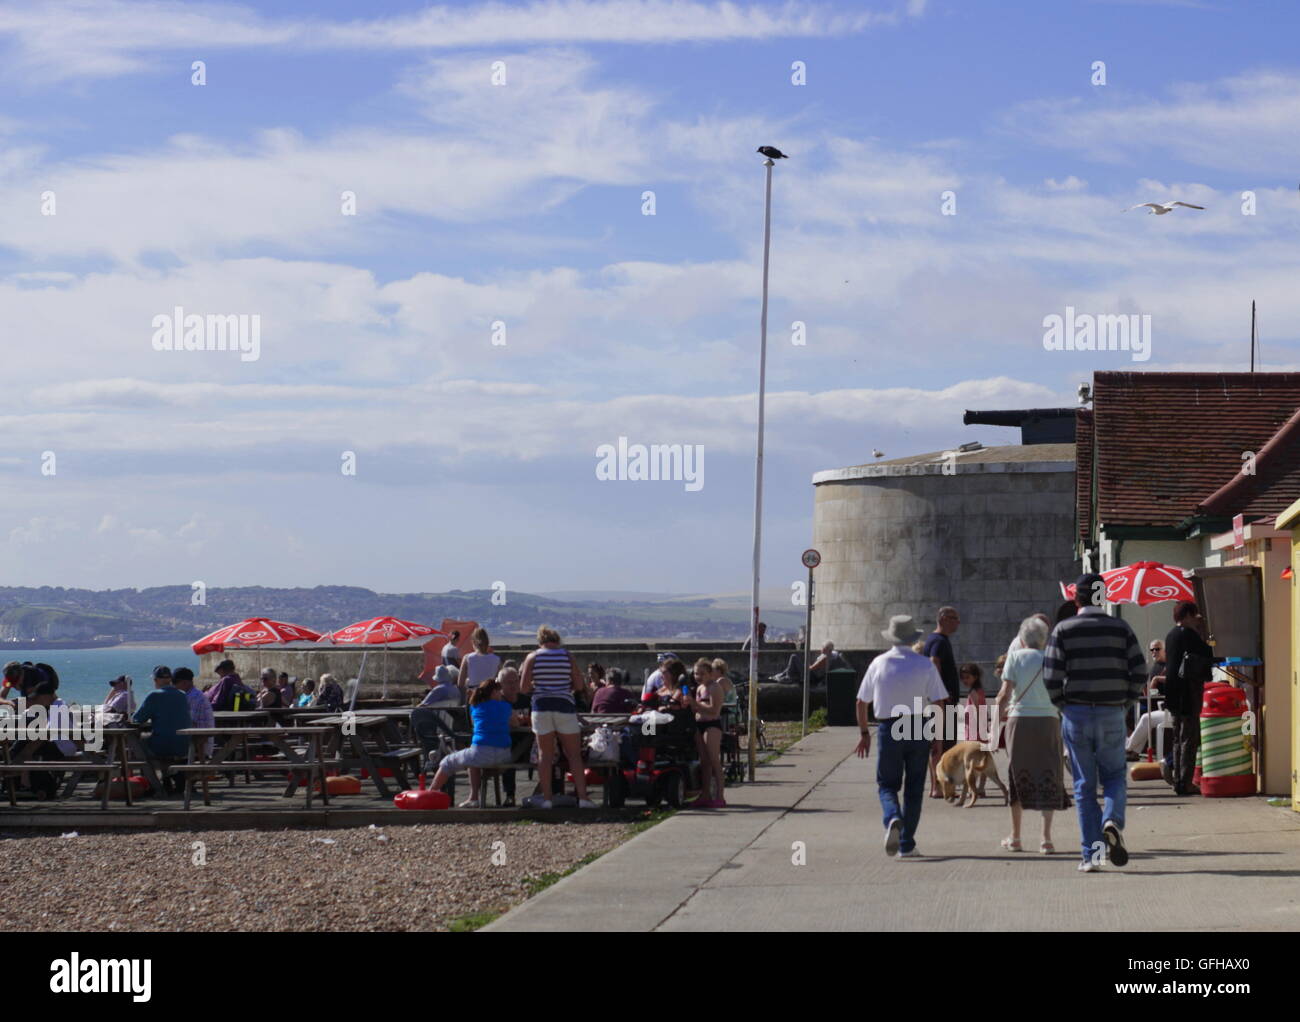 Martello tower and refreshment kiosk along Seaford seafront Stock Photo